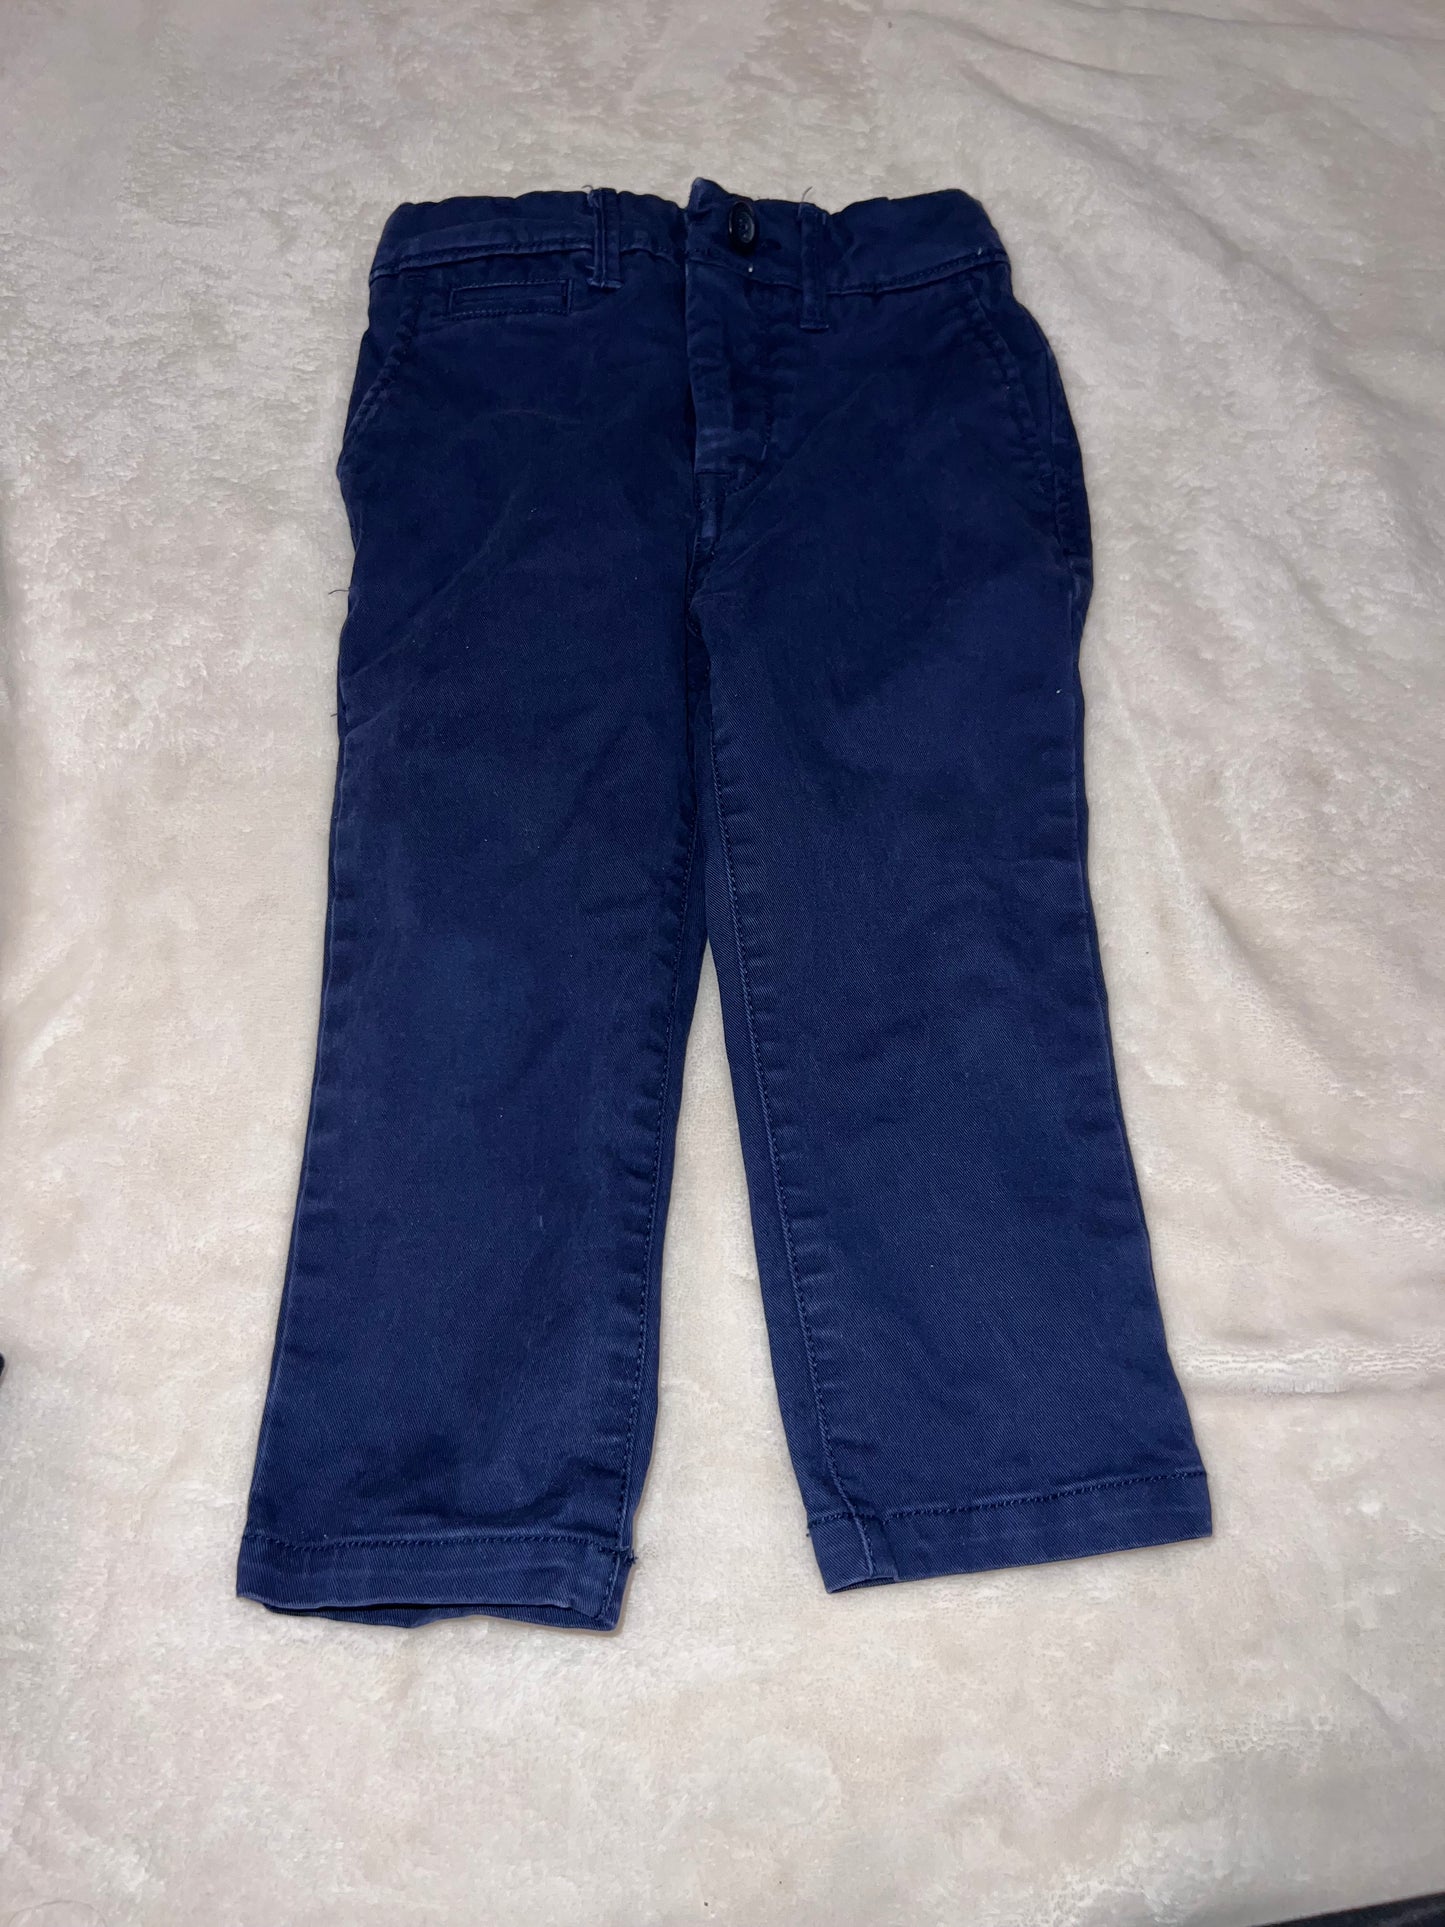 2T Gap dressier Chino pants, navy